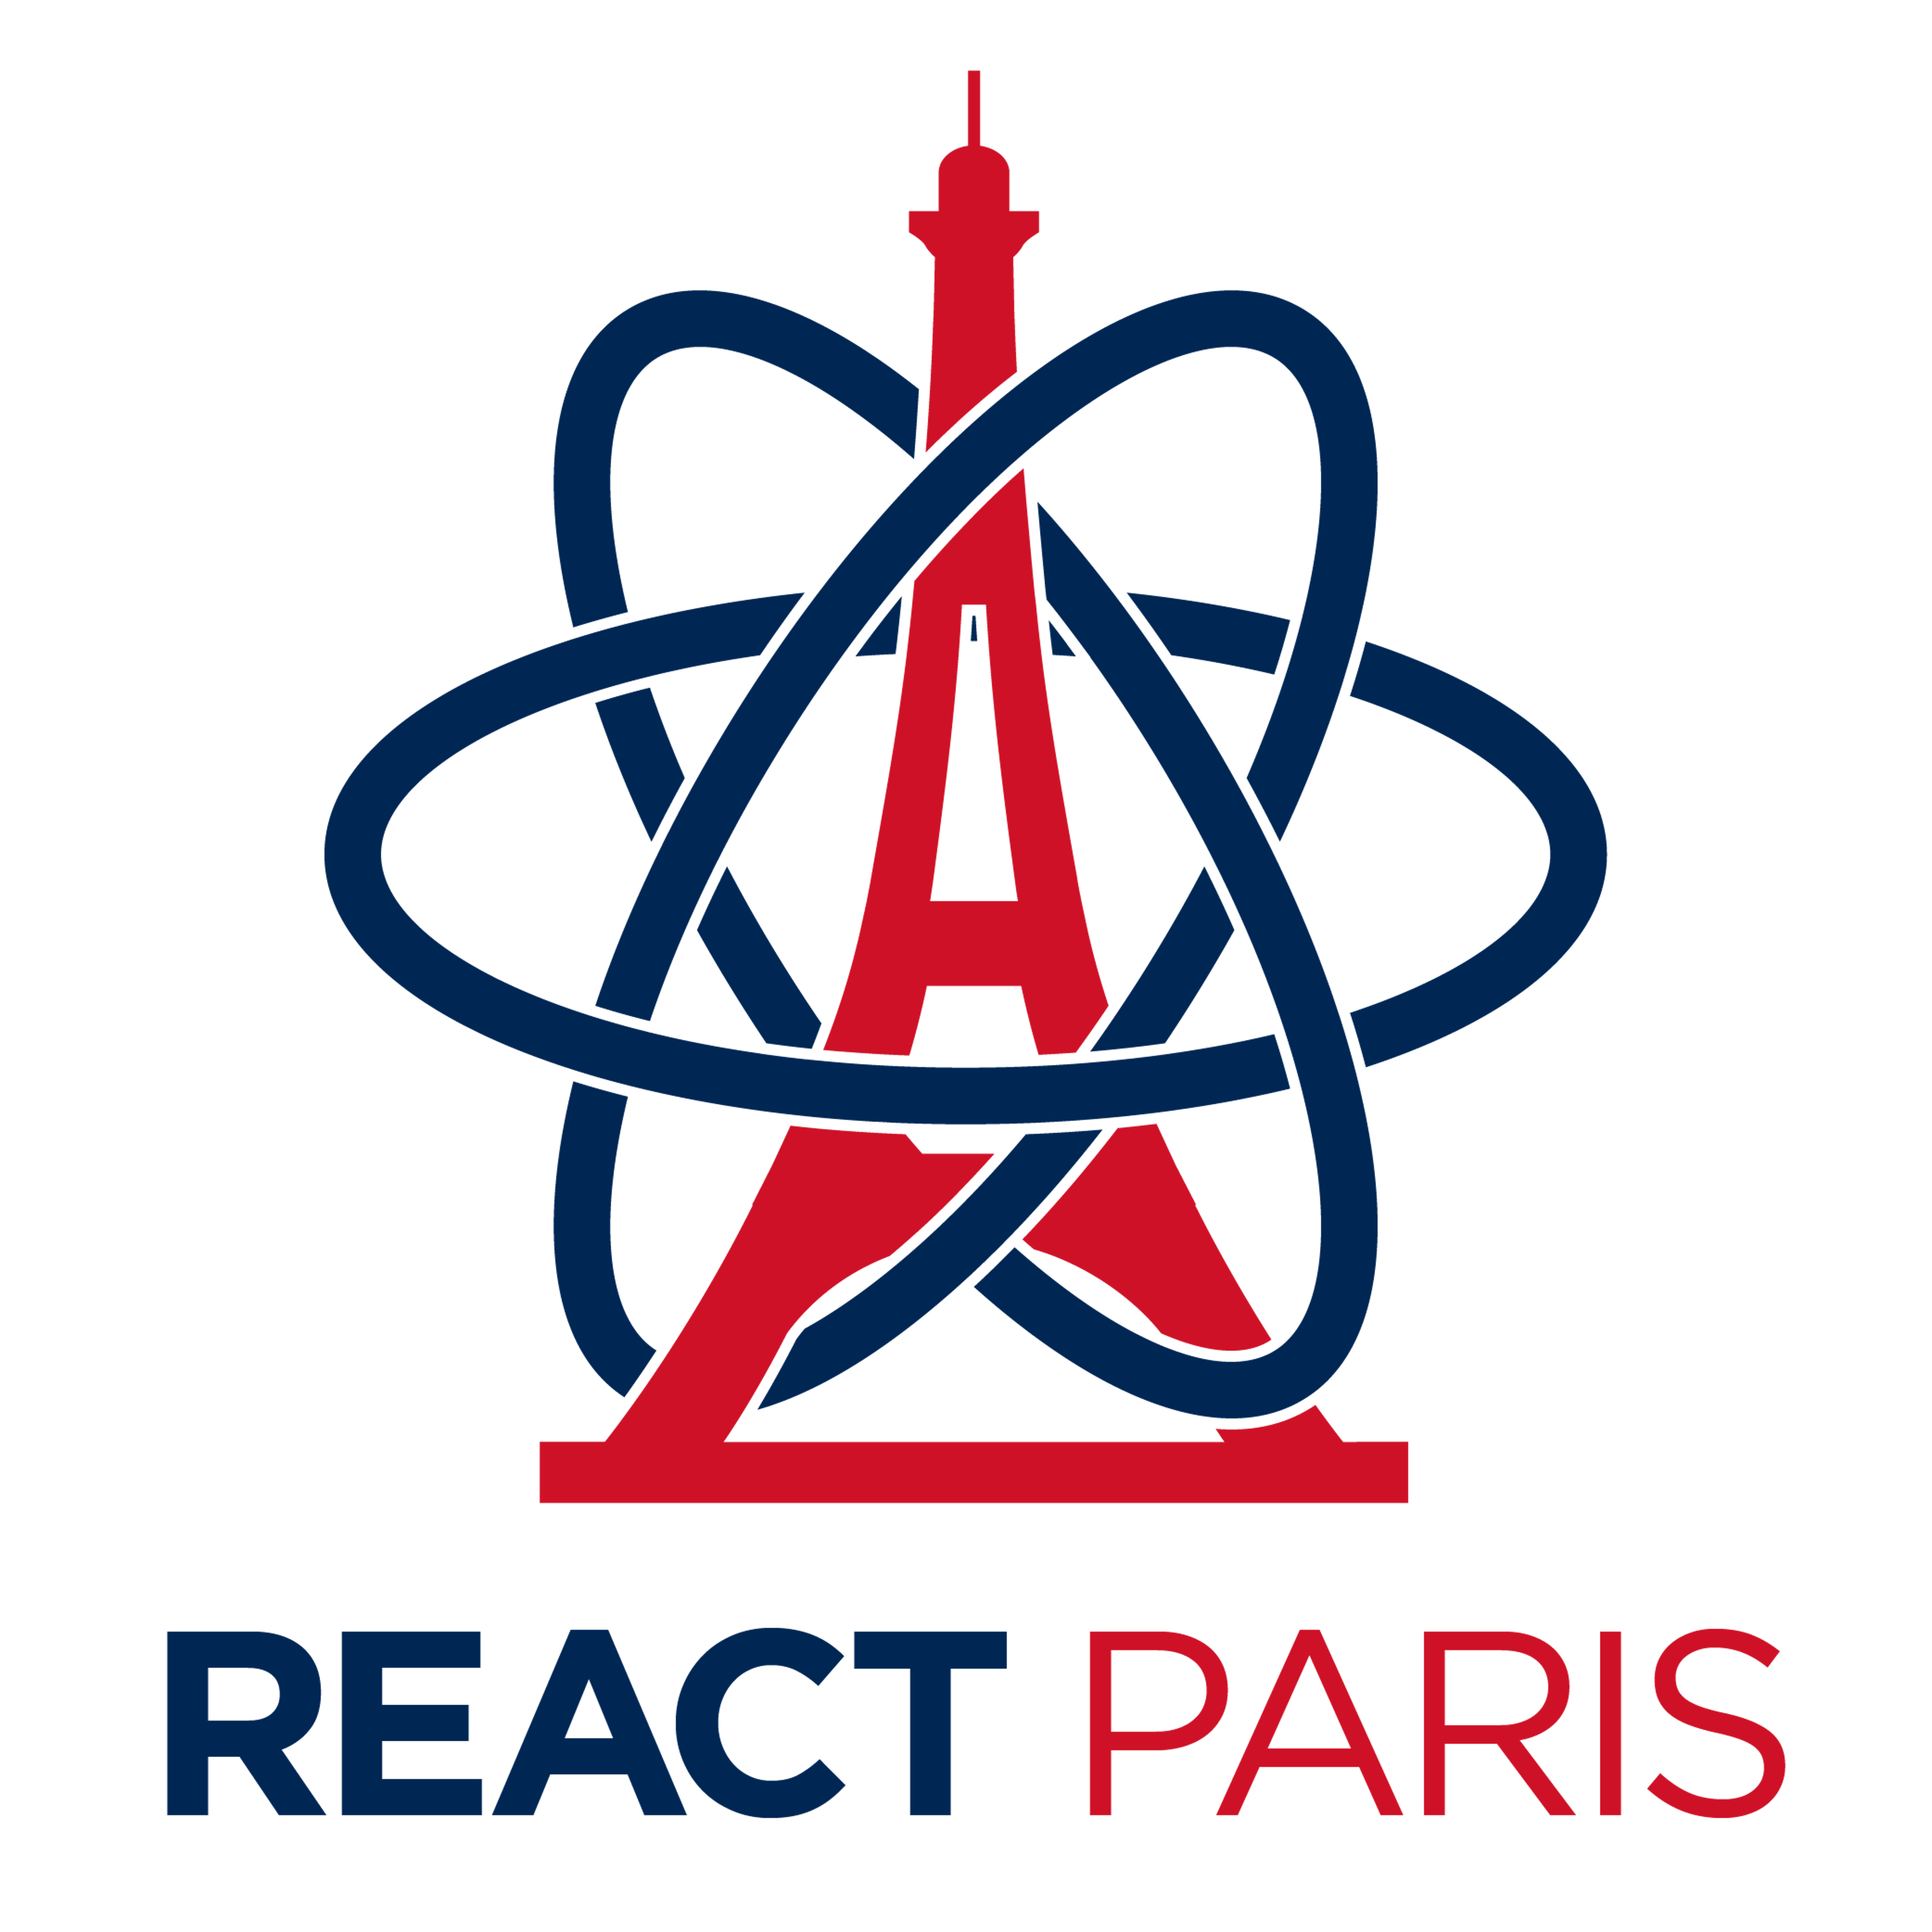 Logo for the React Paris